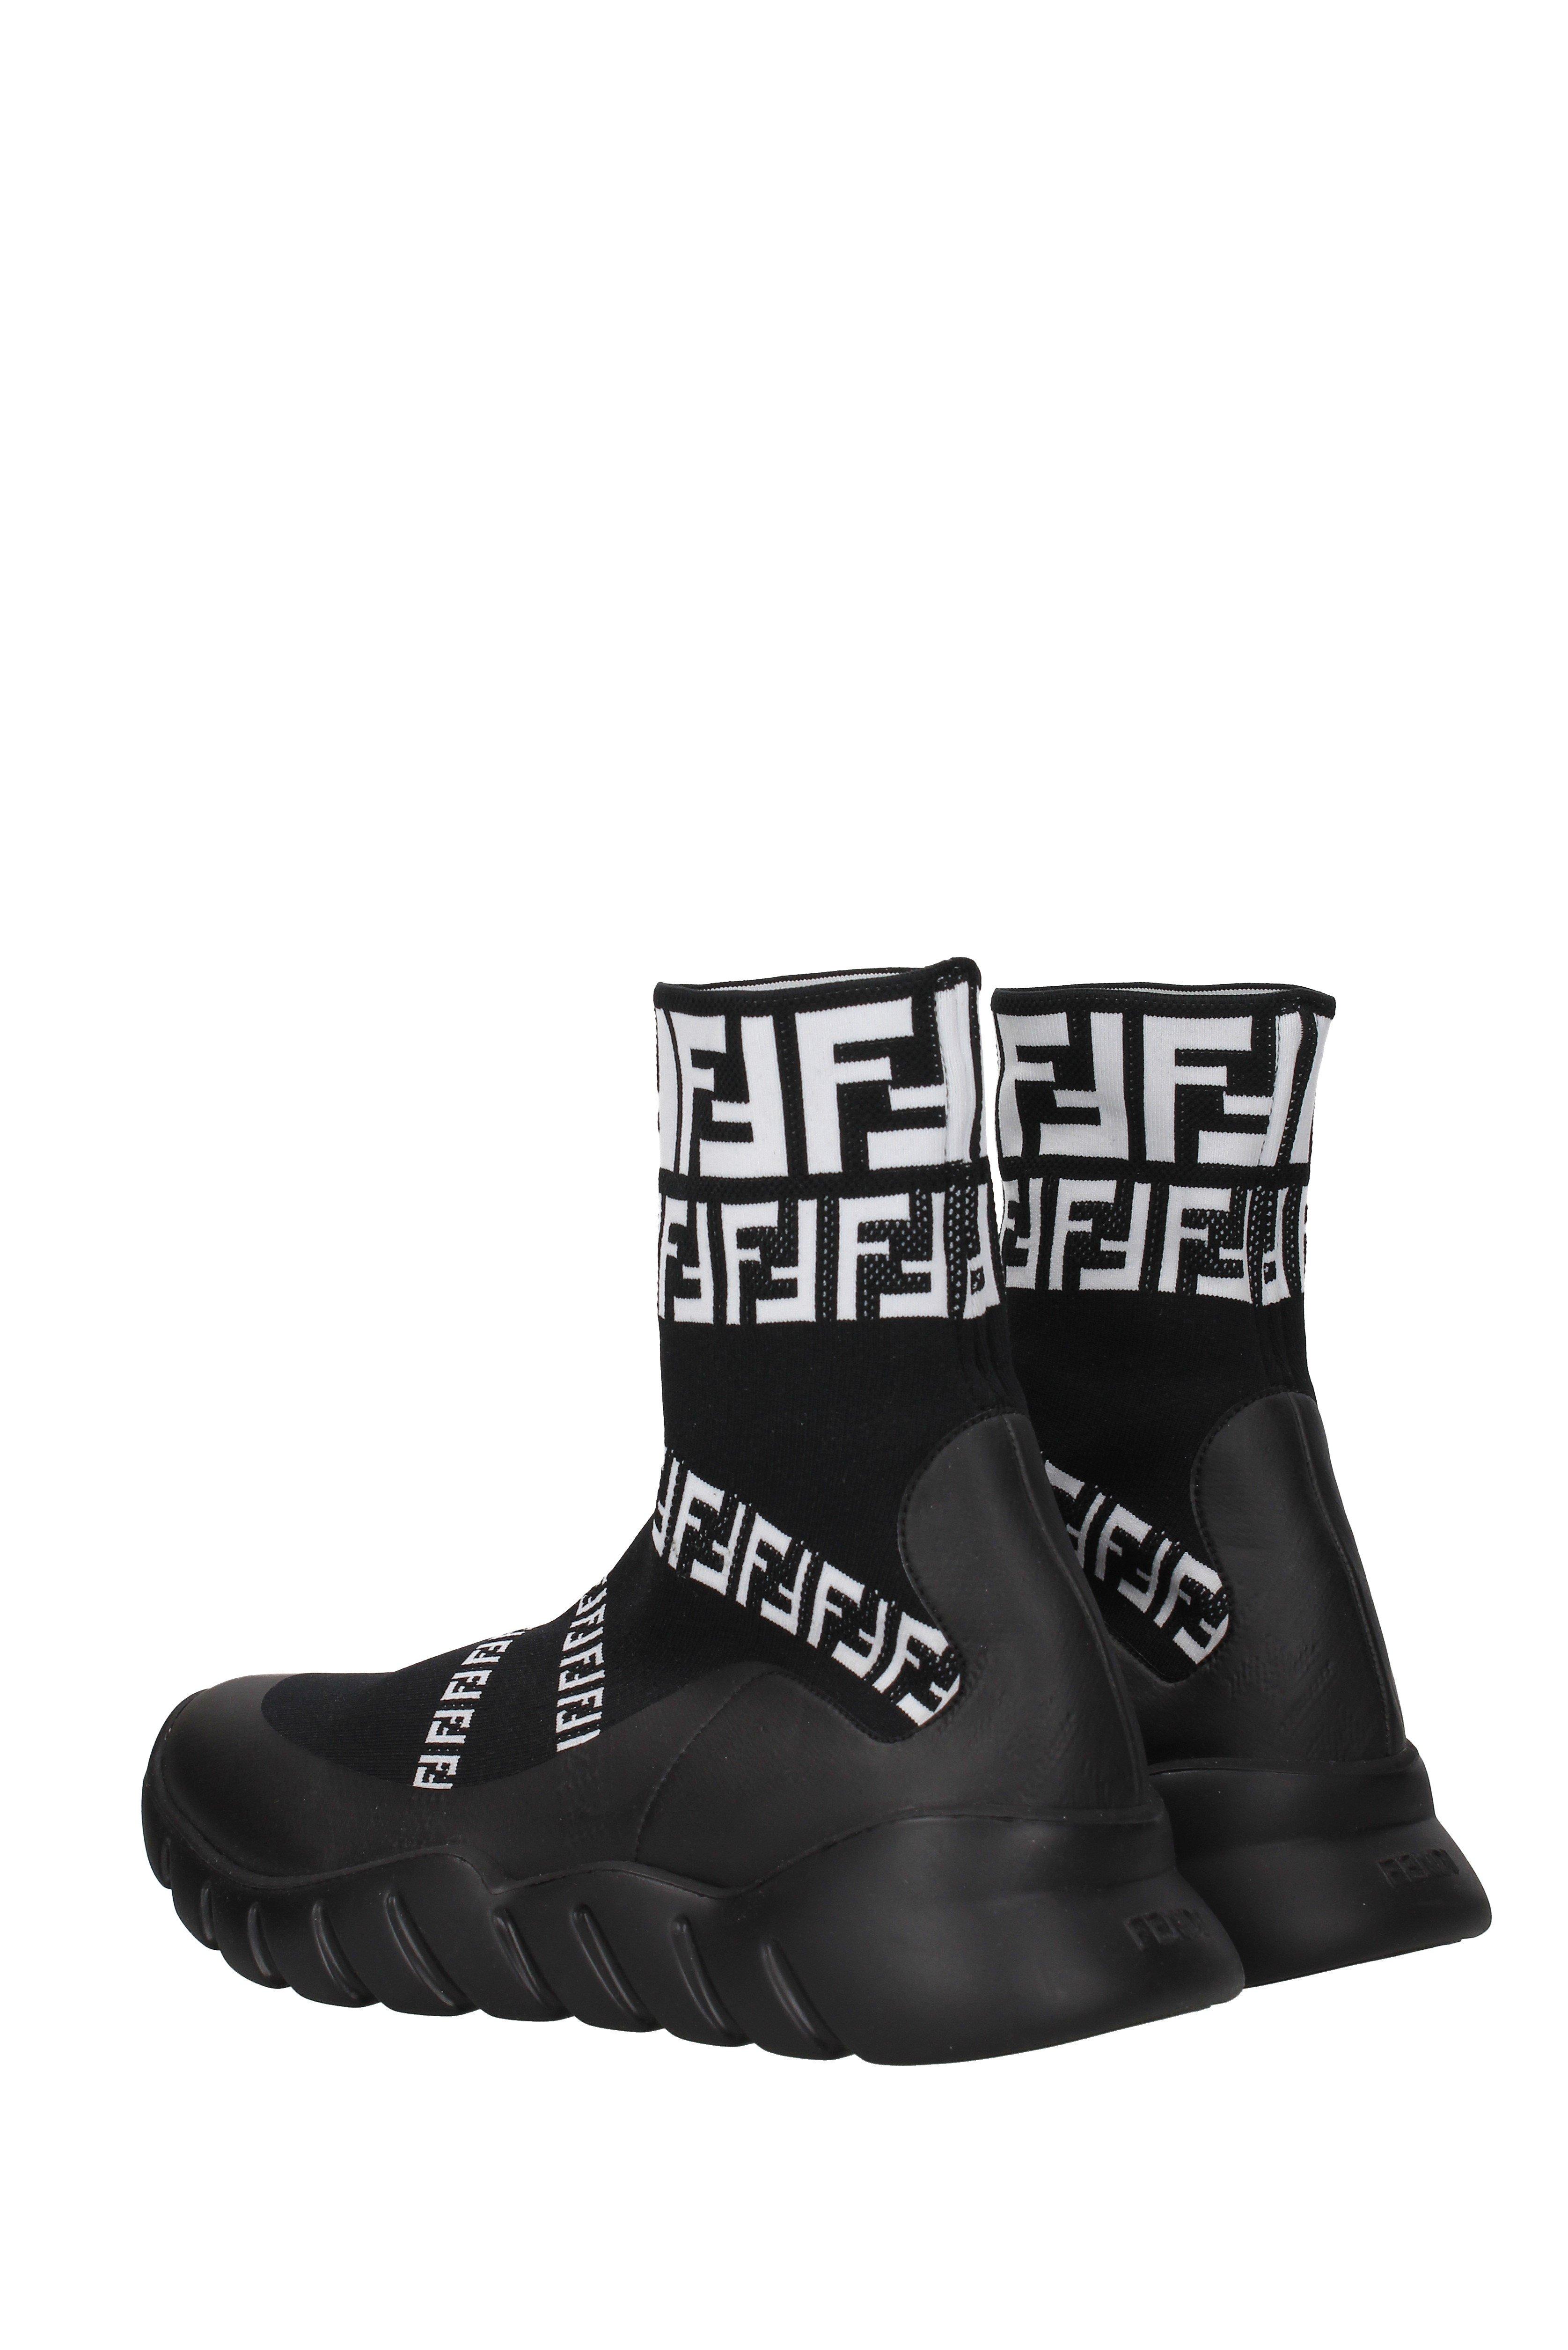 Fendi Ankle Boots in Black for Men - Lyst